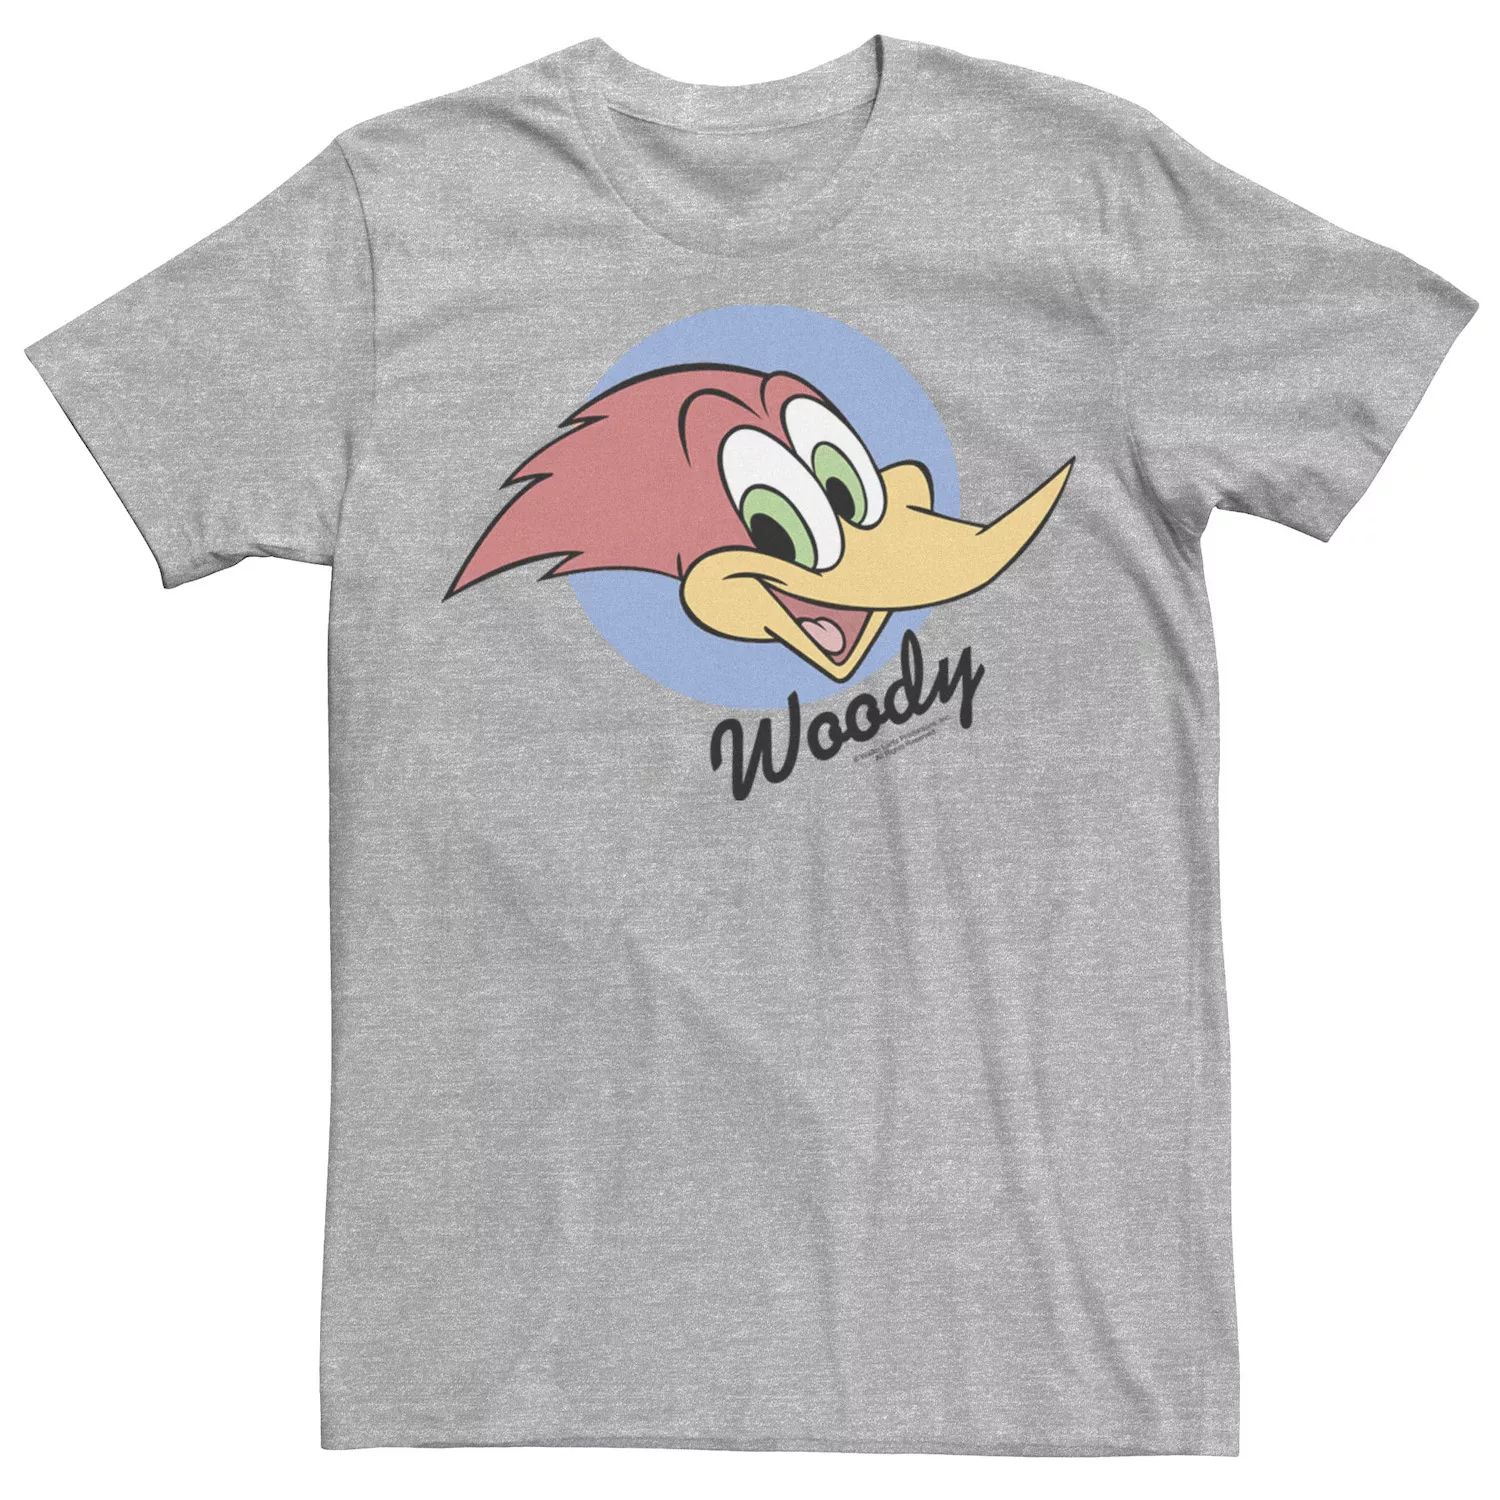 Мужская футболка с графическим логотипом Woody Woodpecker Circle Portrait Licensed Character